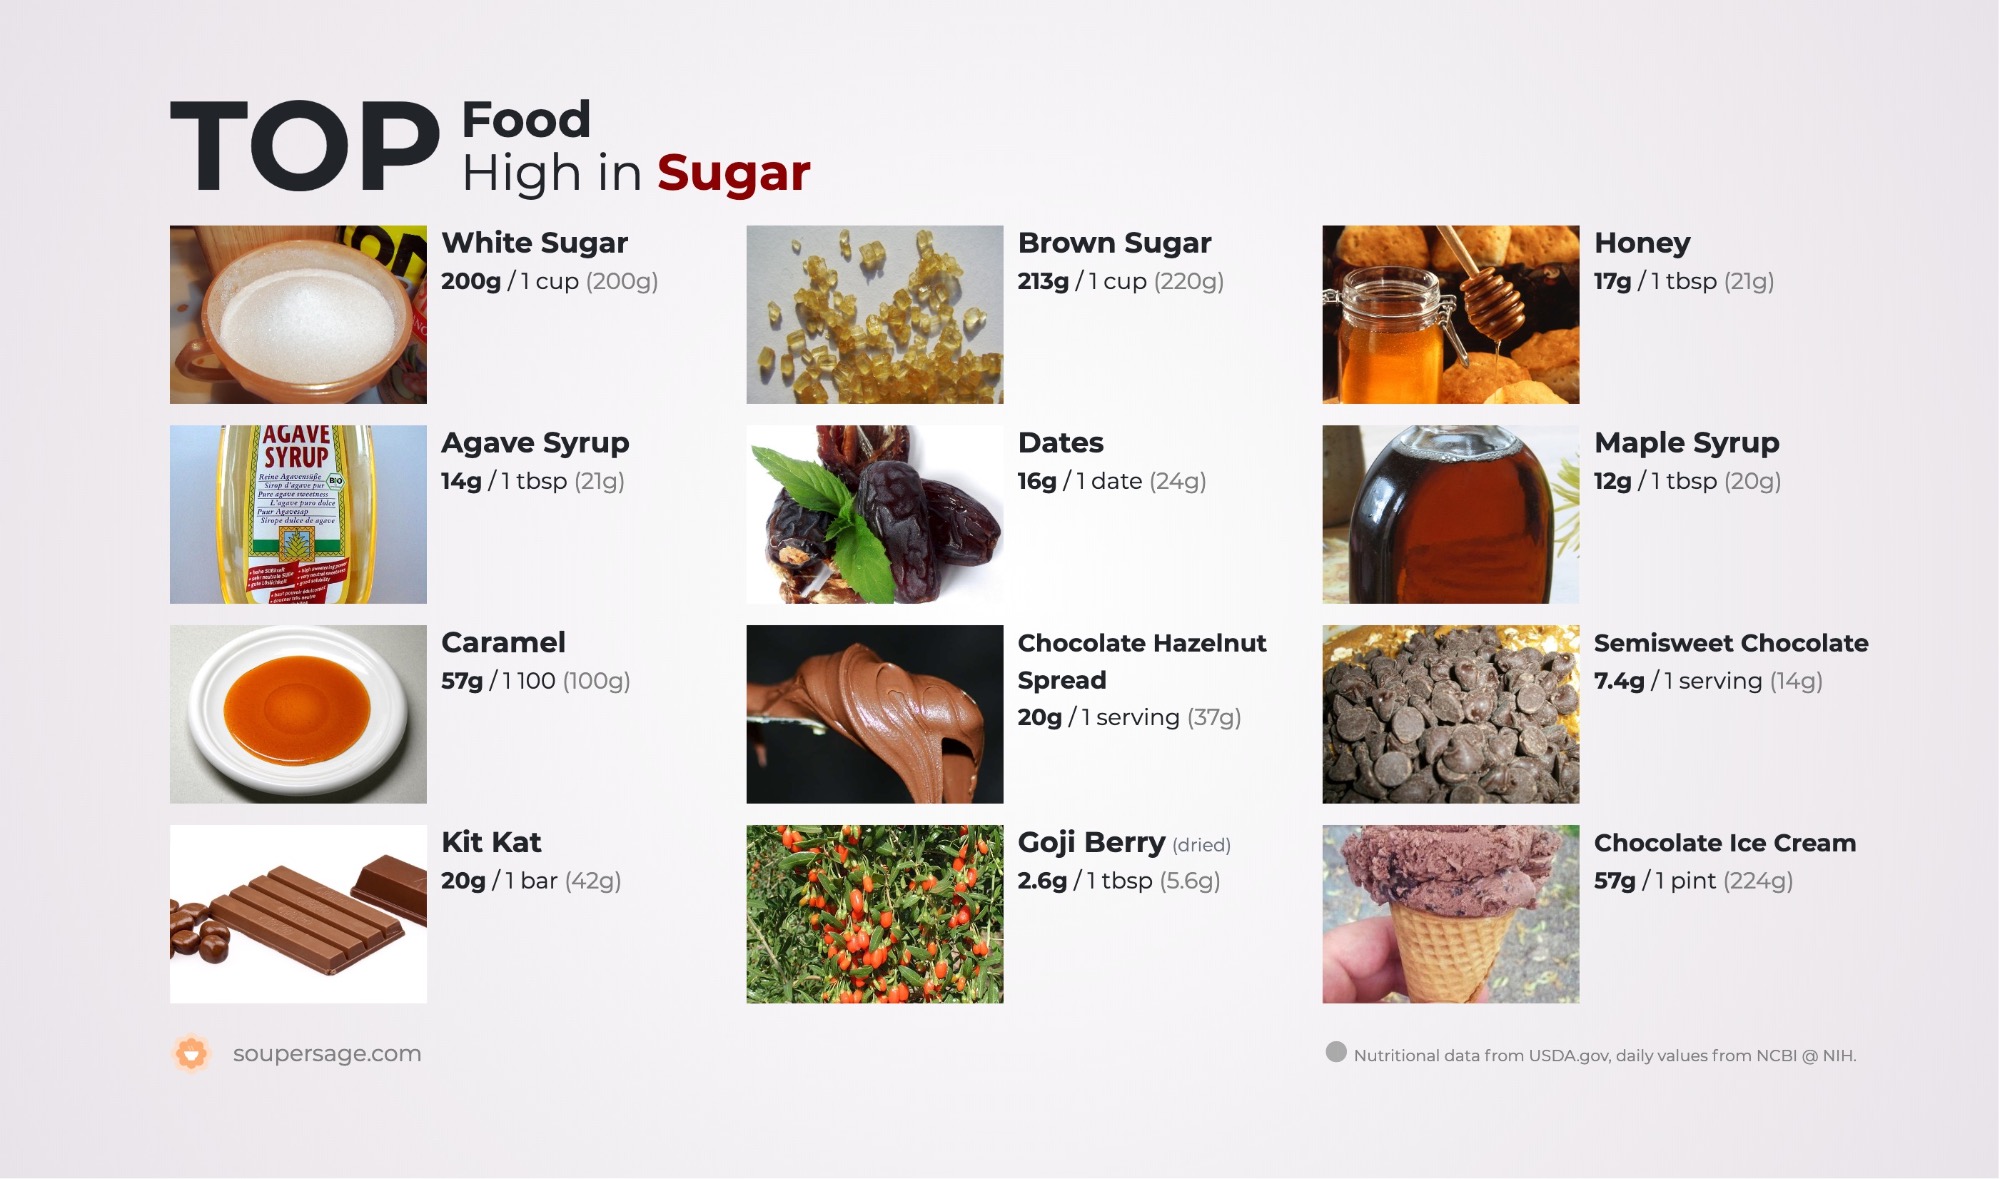 Top Food High in Sugar